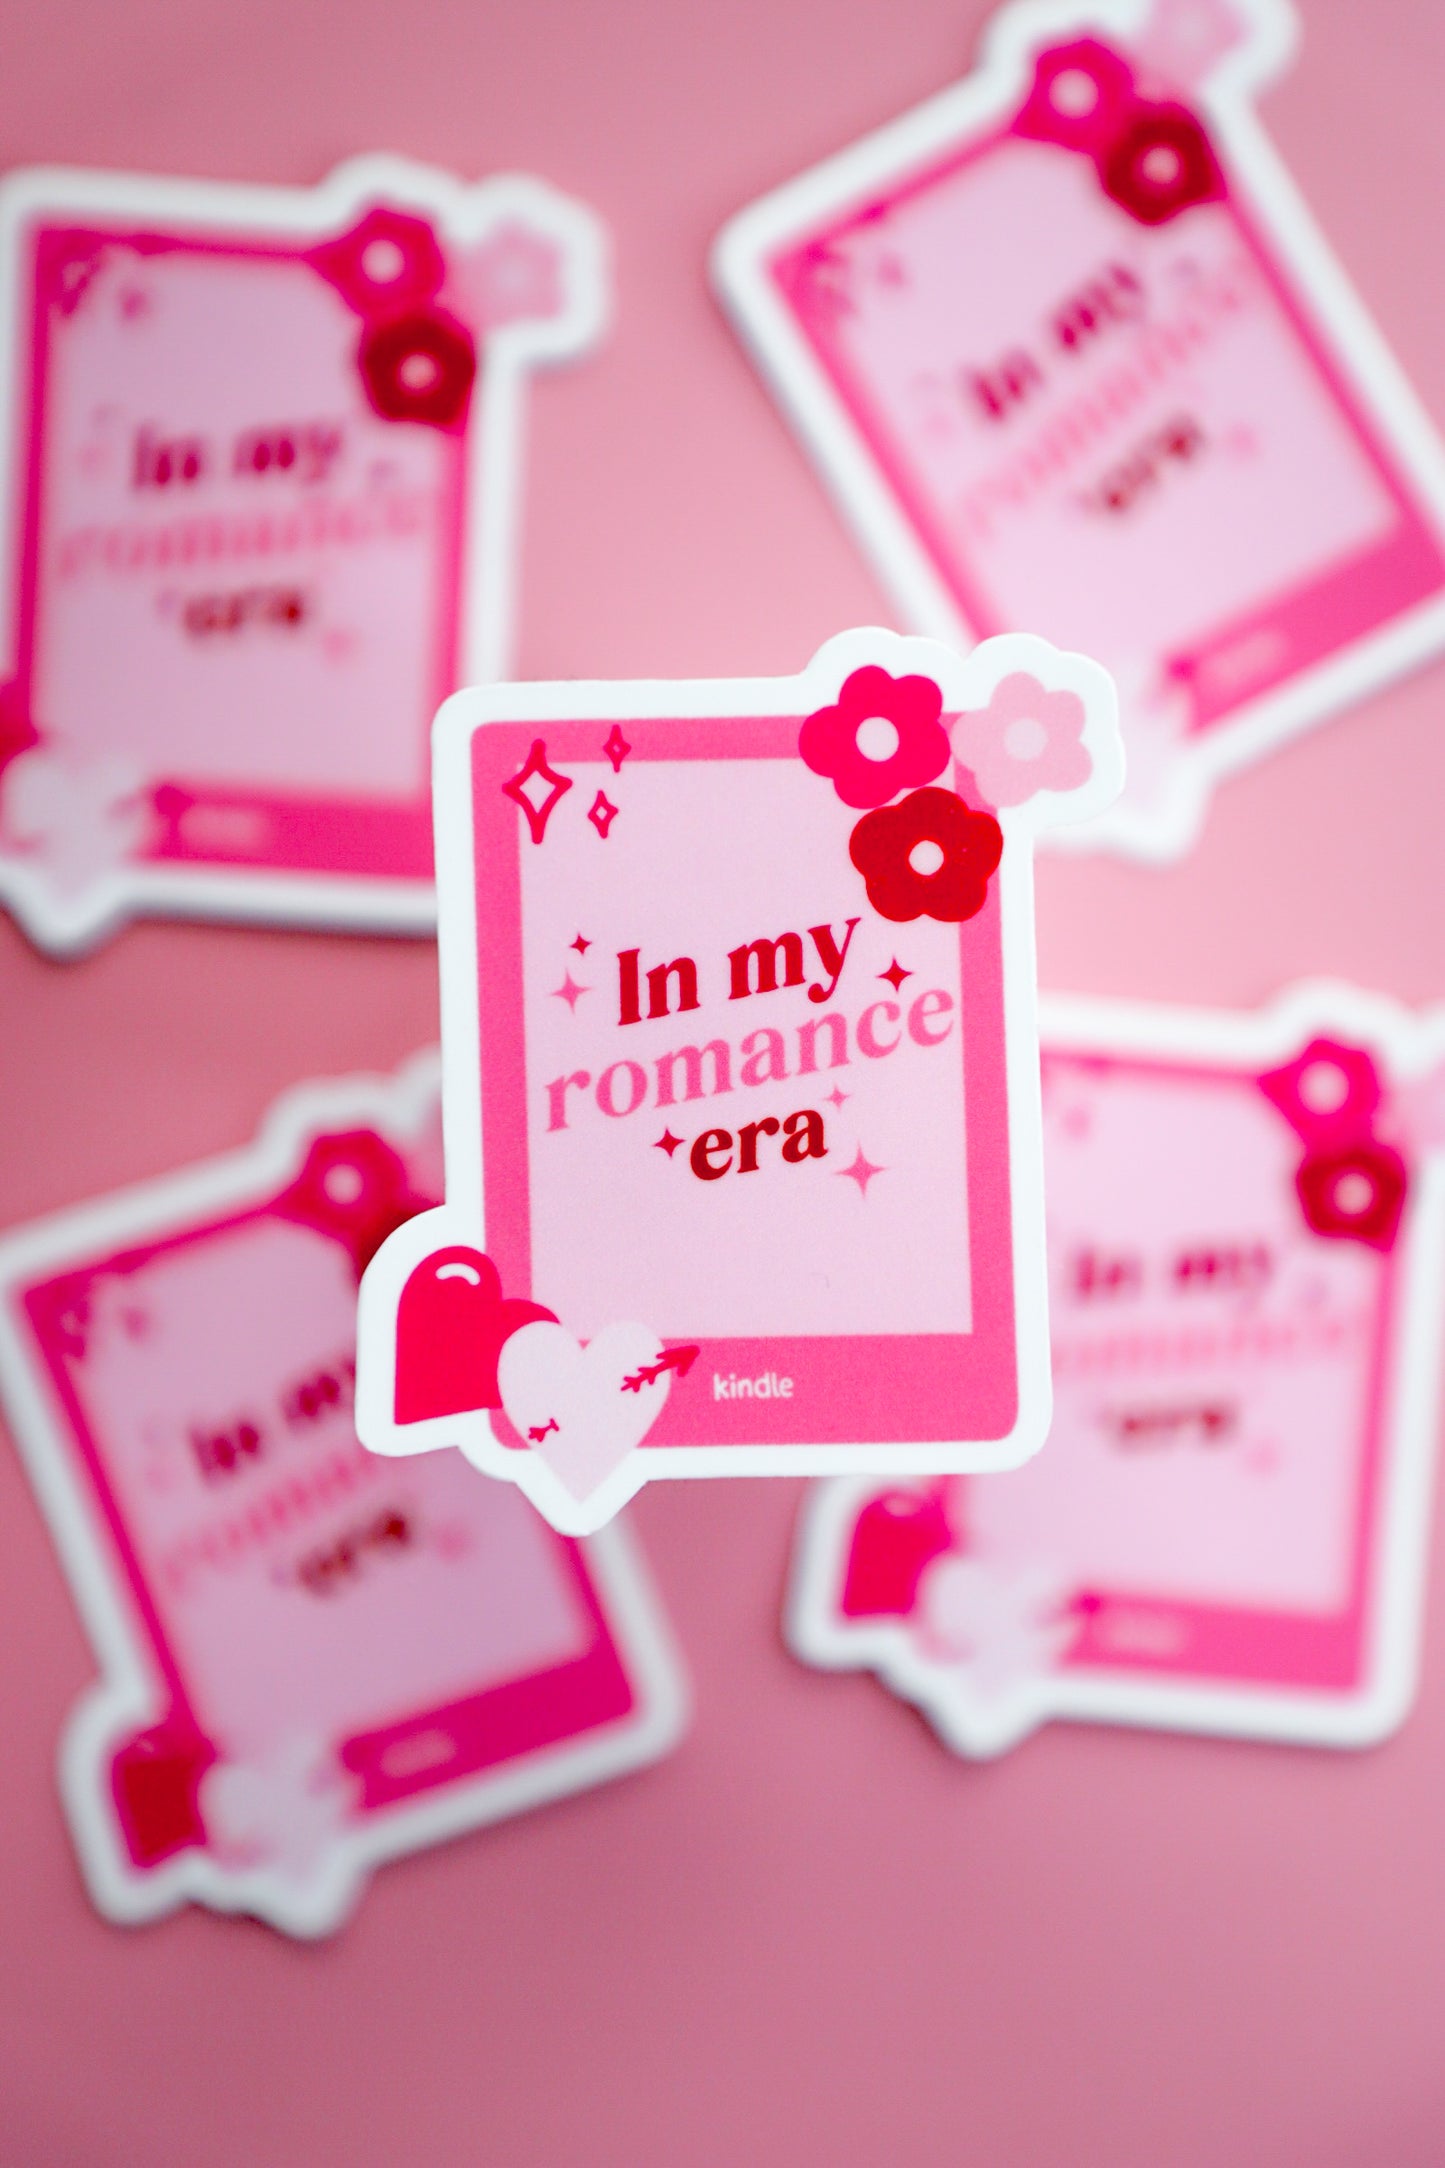 In My Romance Era Kindle Sticker